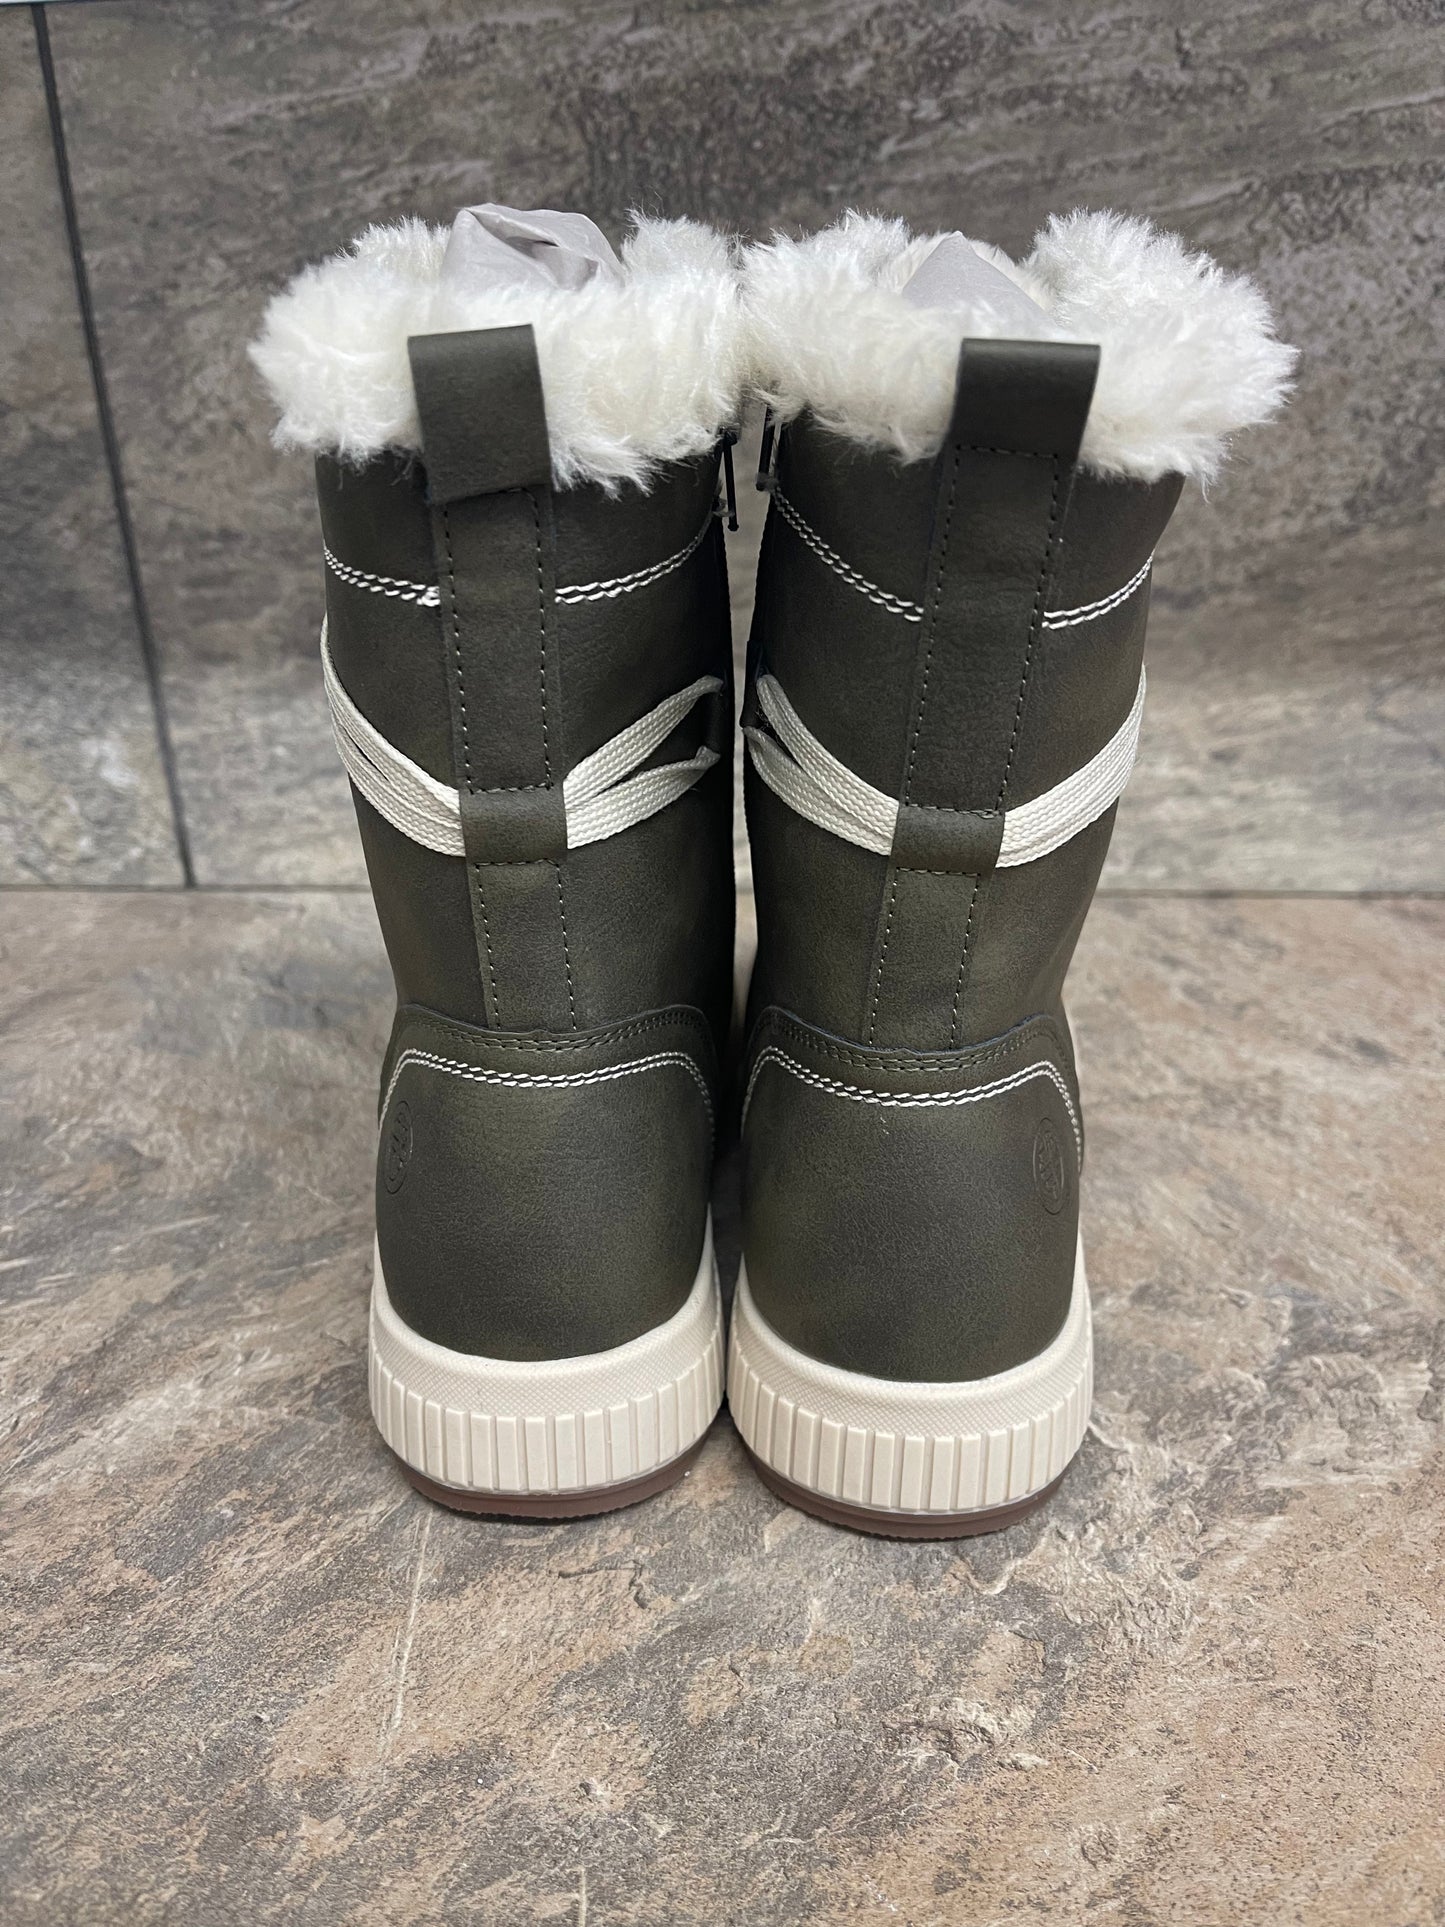 Khaki high top winter boots sizes 3-8